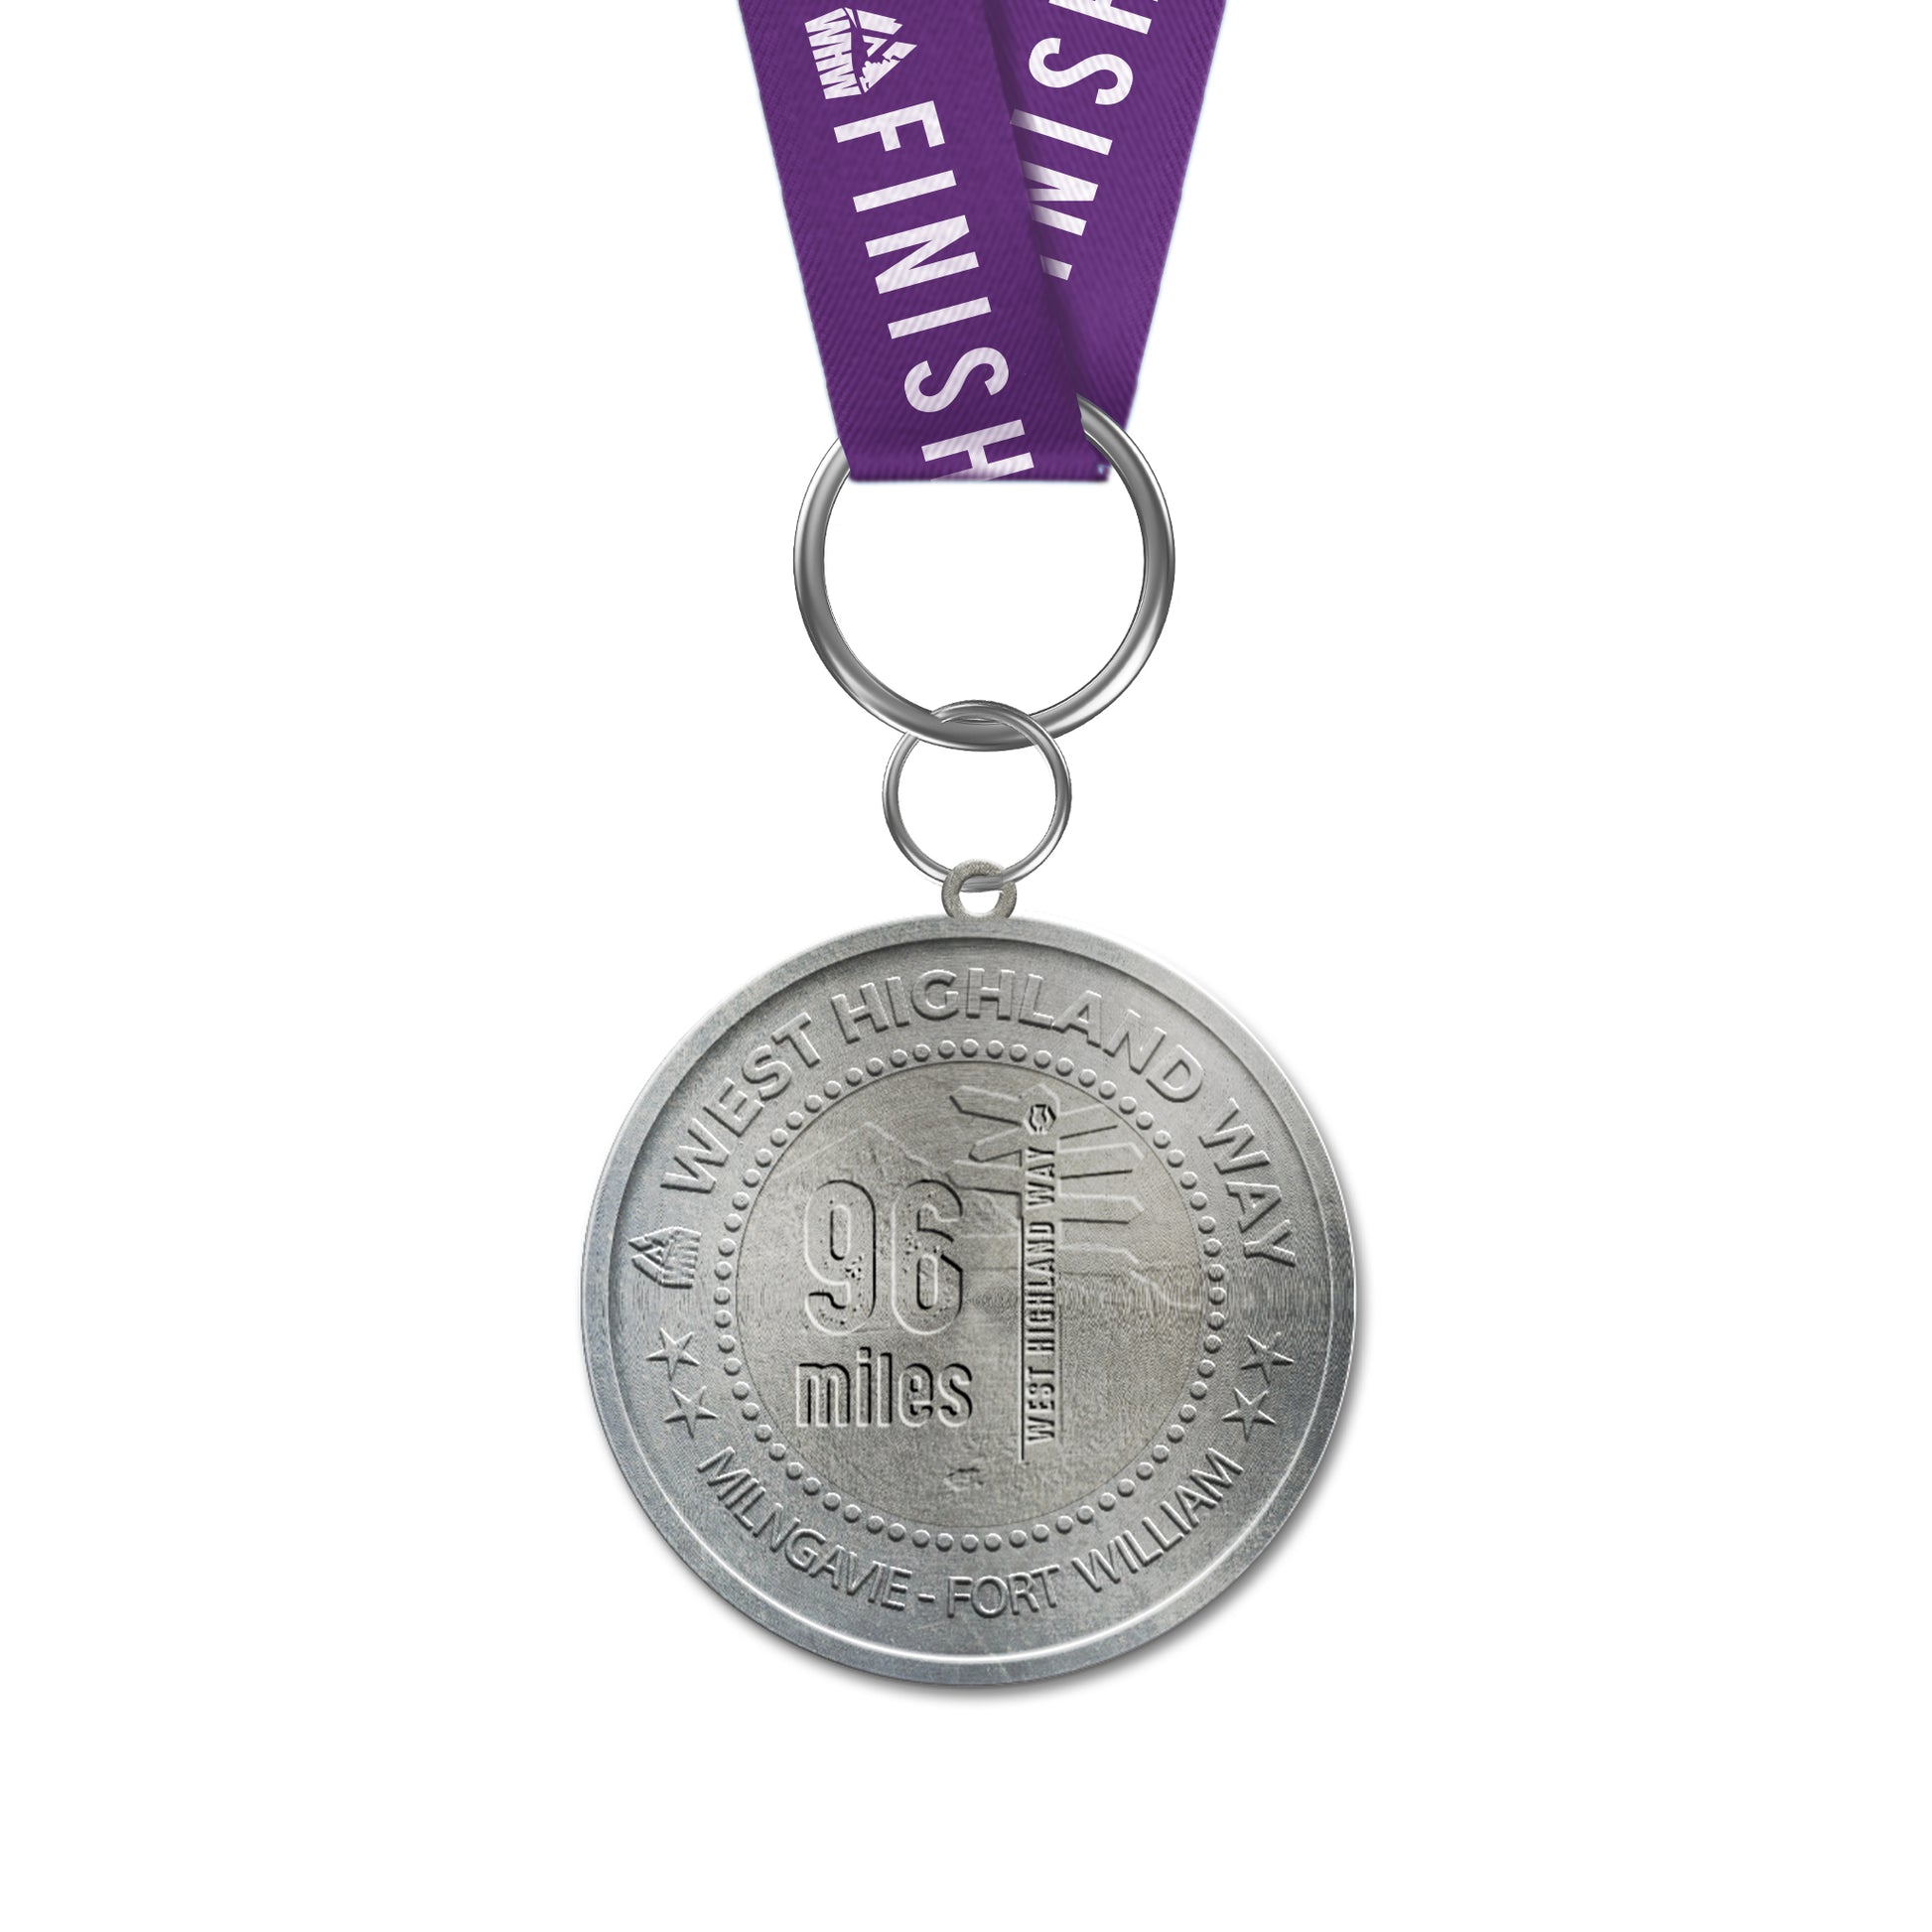 West Highland Way 96 miles finishers medal